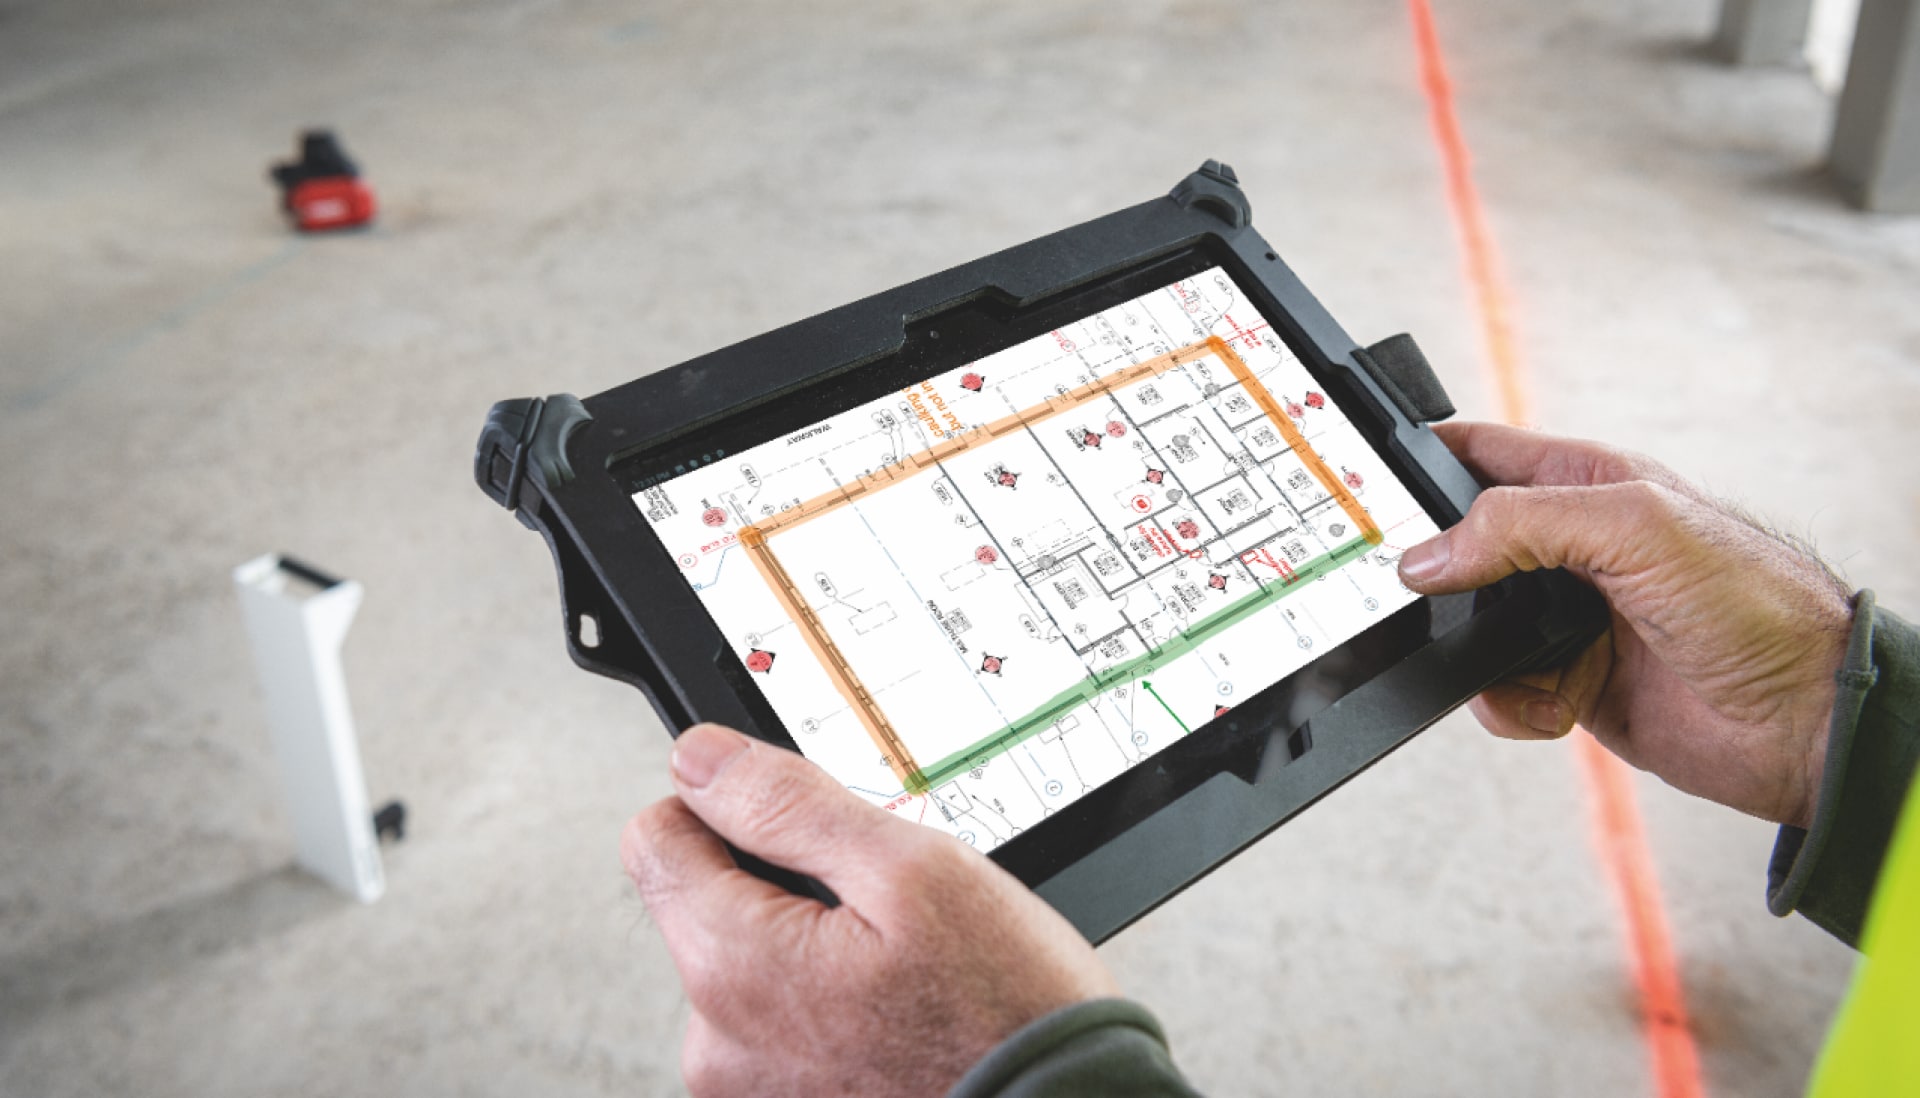 Application de gestion de chantier Fieldwire by Hilti sur une tablette